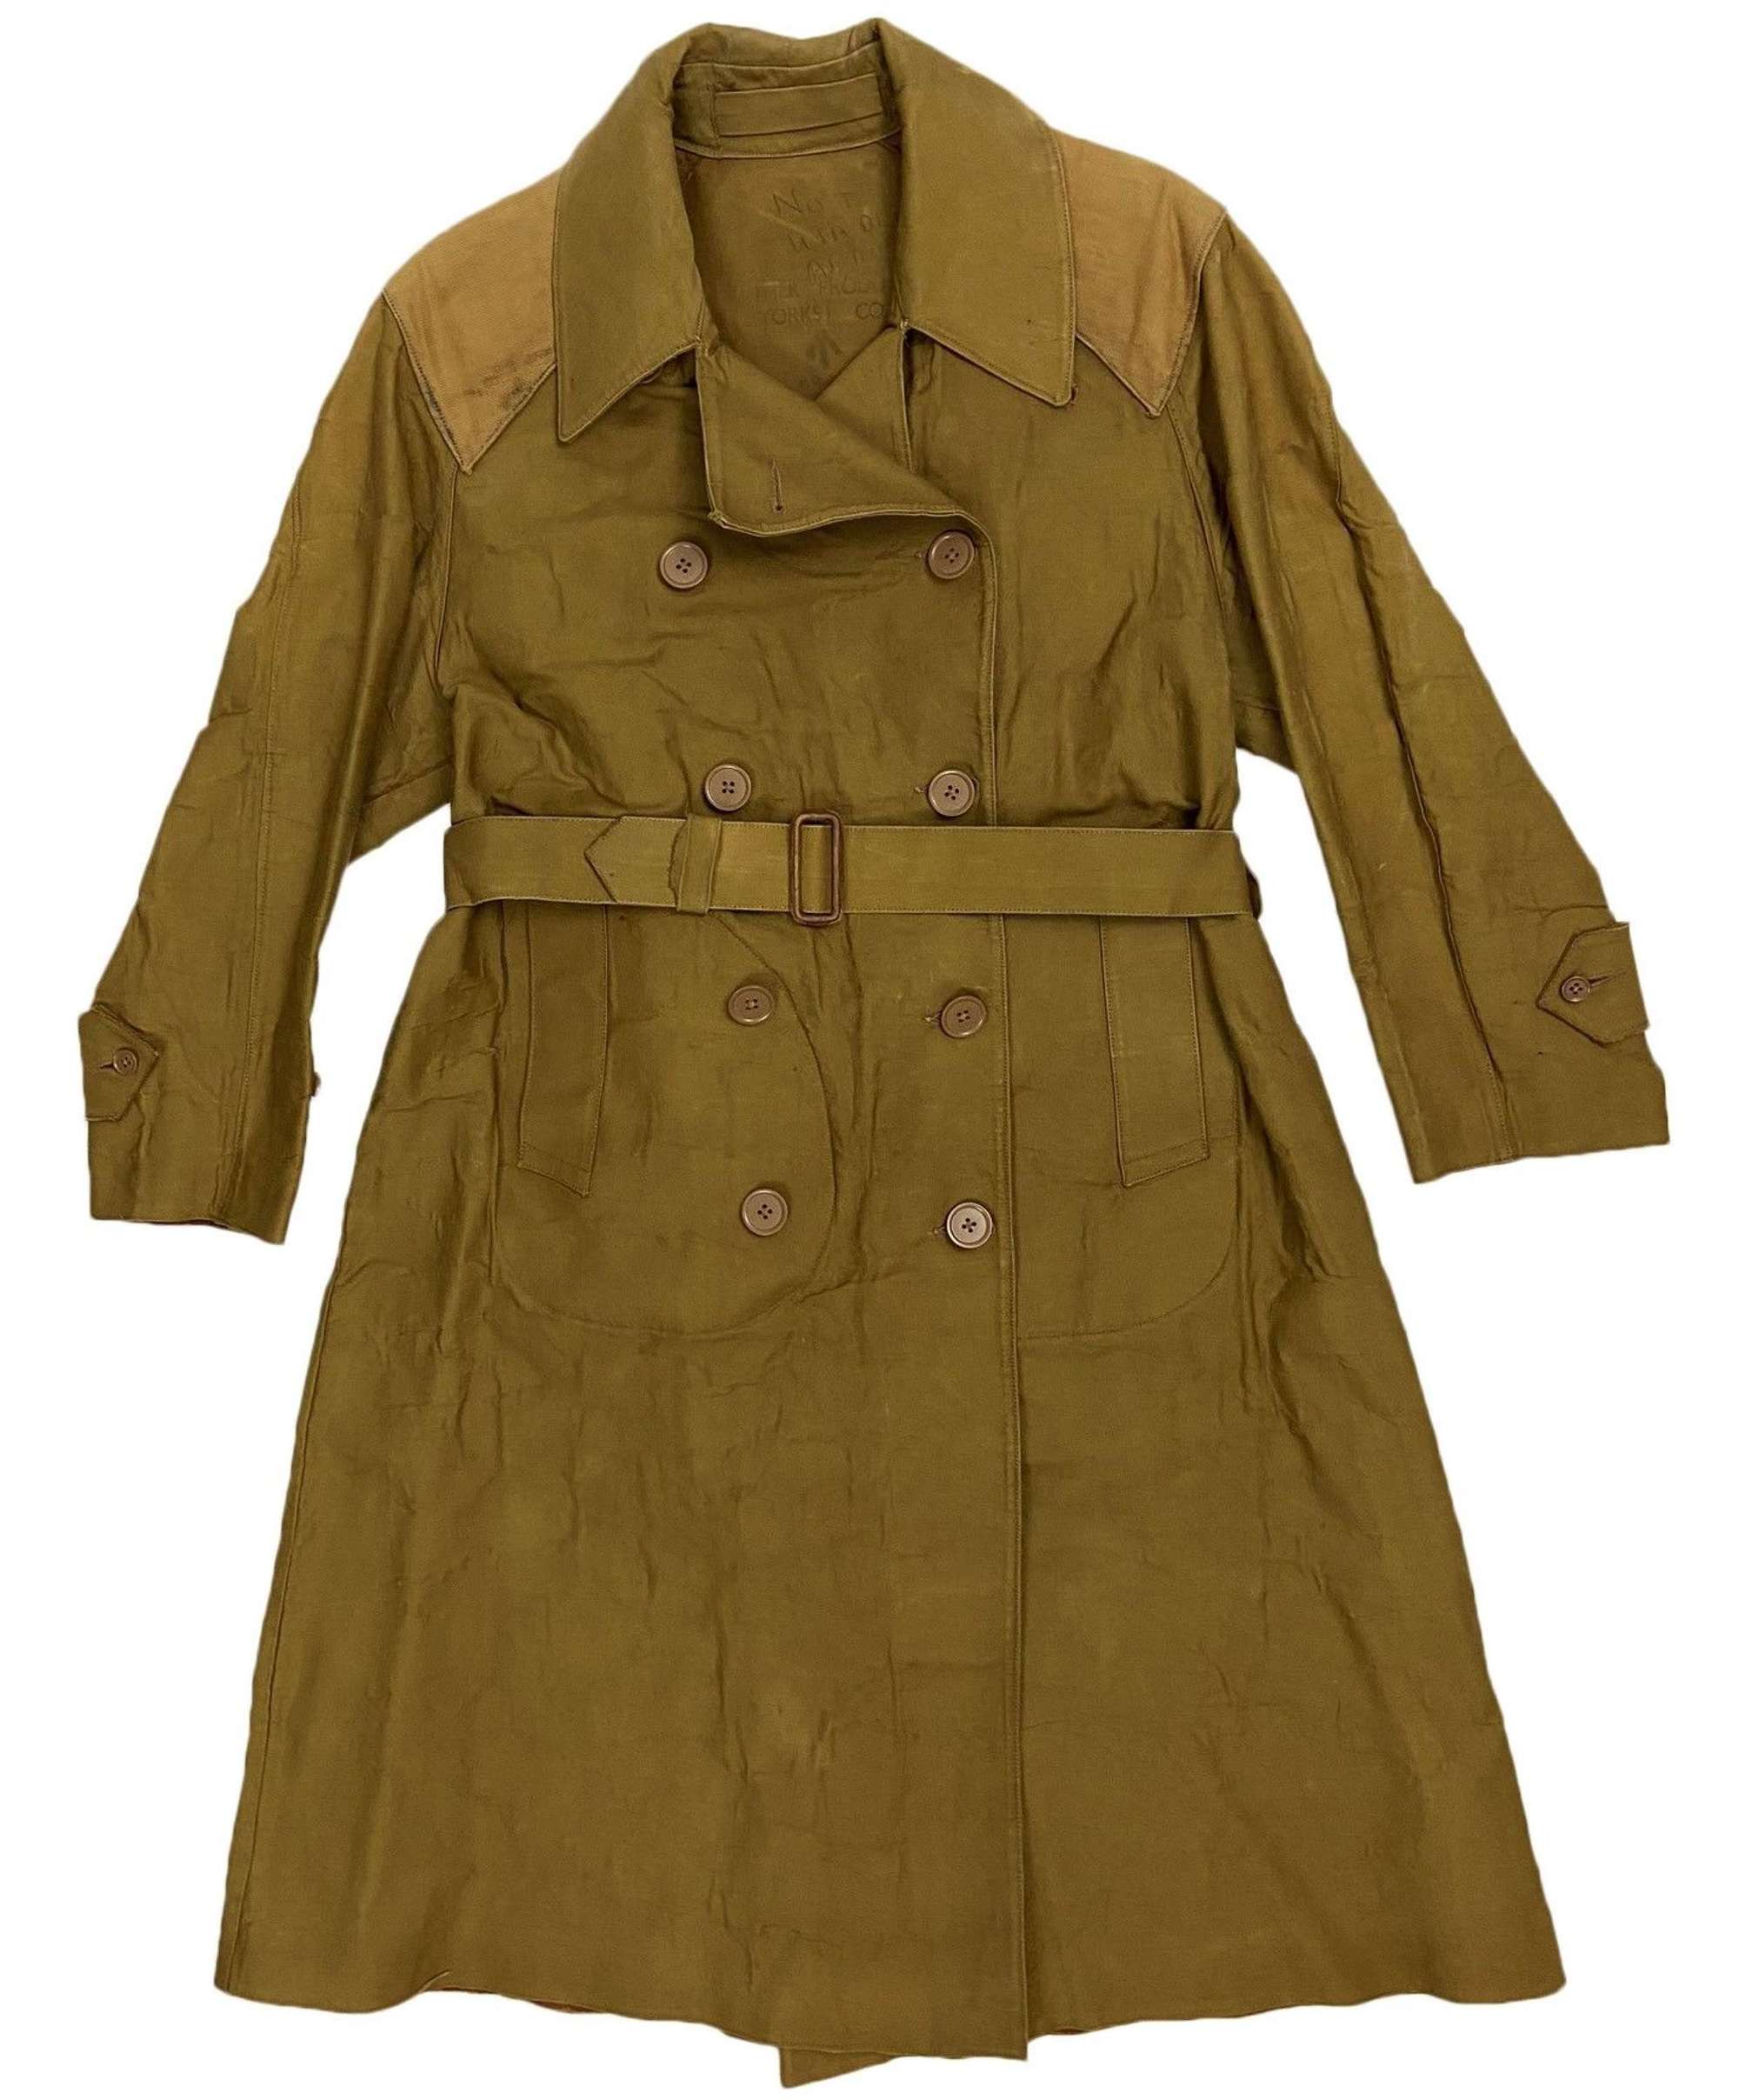 Original Women's Land Army Macintosh Raincoat - Size Small